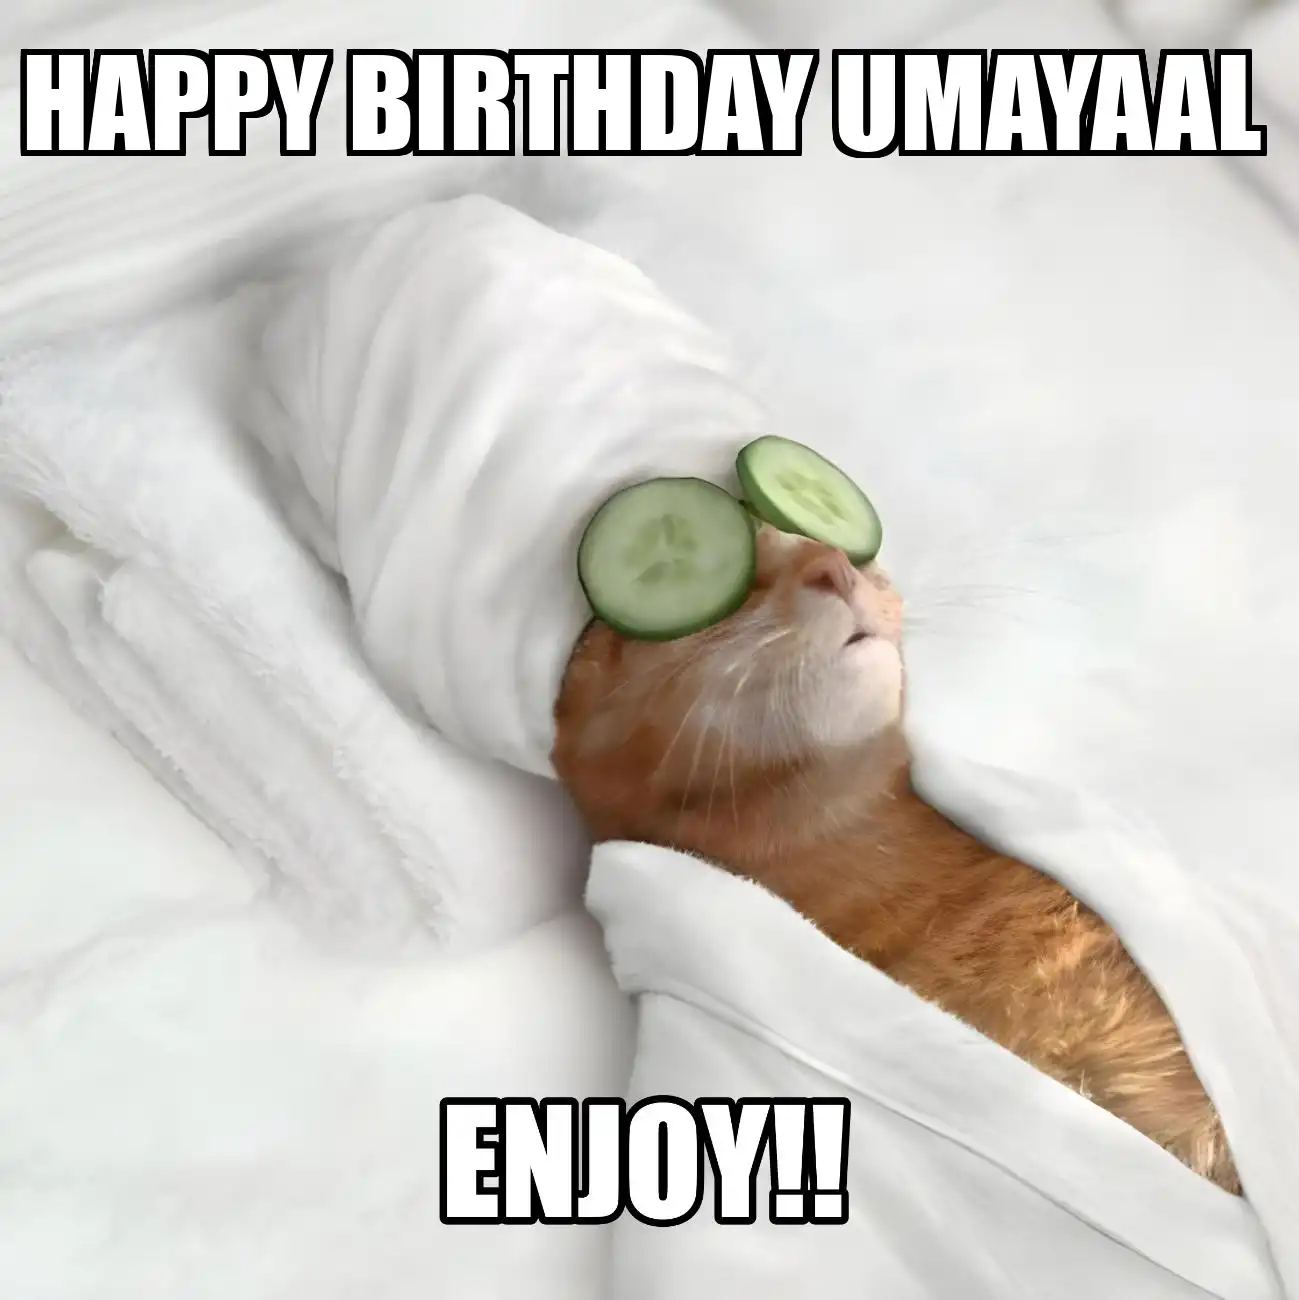 Happy Birthday Umayaal Enjoy Cat Meme